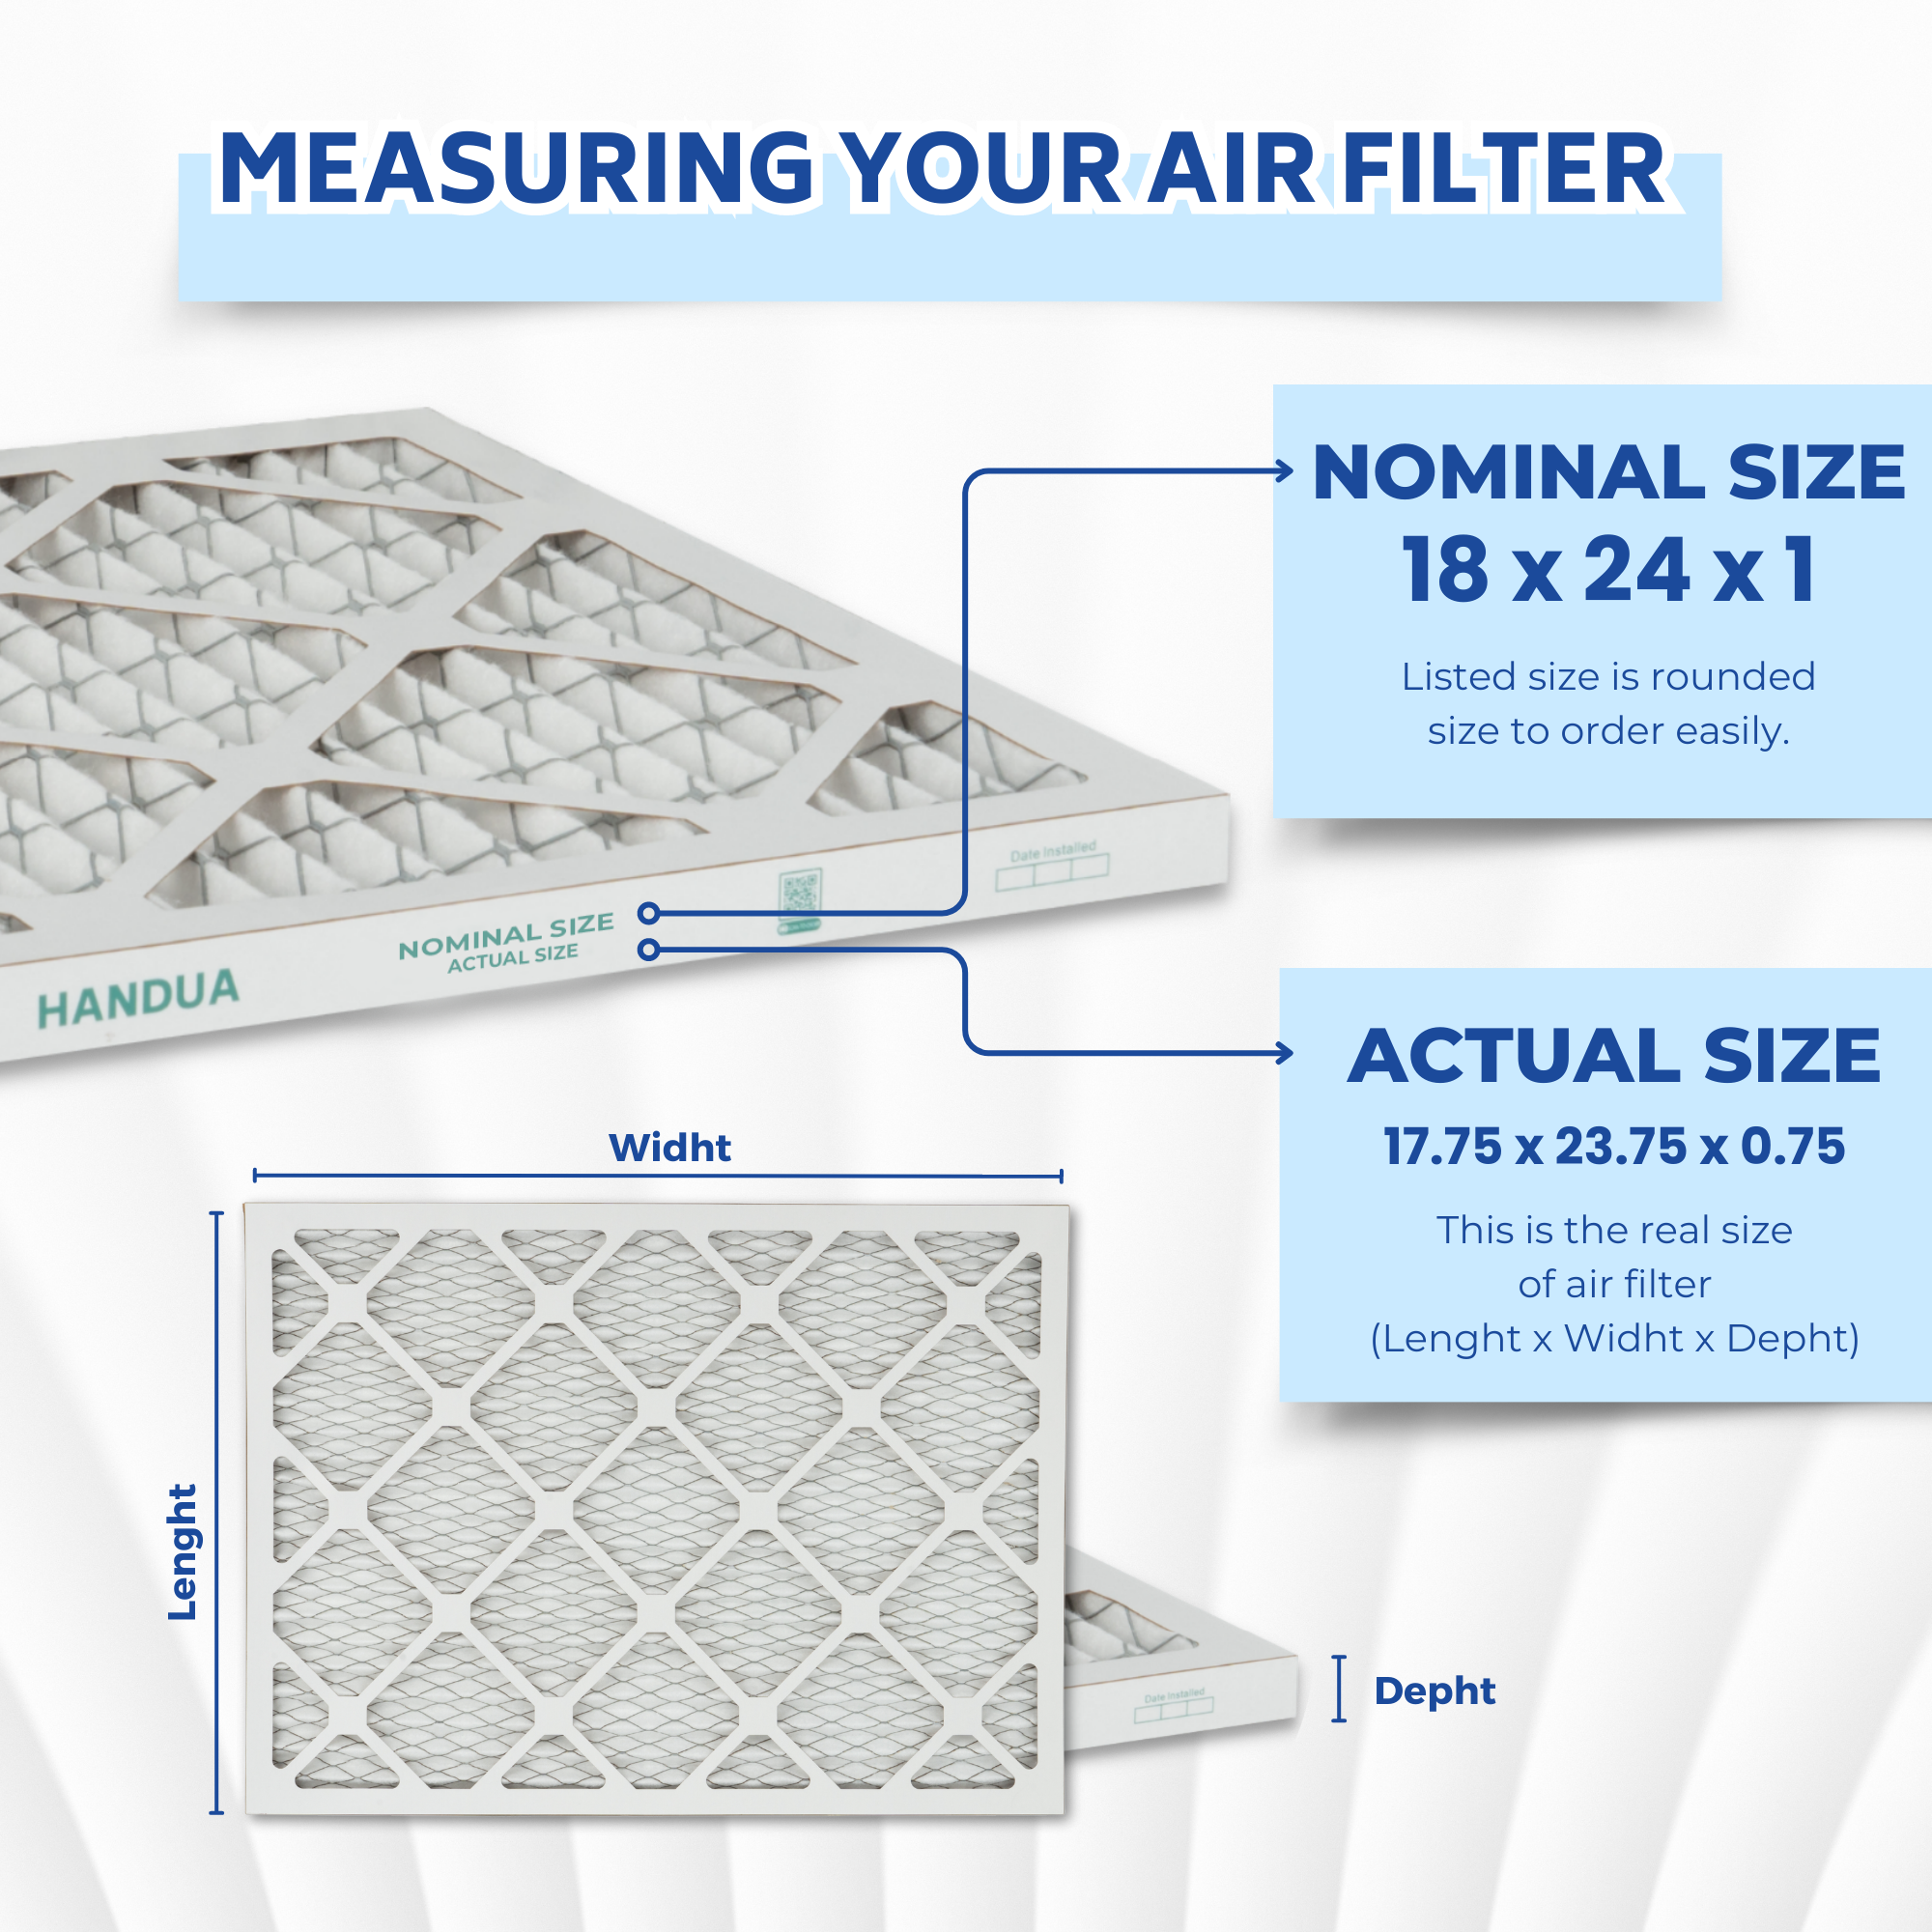 Handua 18x24x1 Air Filter MERV 8 Dust Control, Plated Furnace AC Air Replacement Filter, 4 Pack (Actual Size: 17.75" x 23.75" x 0.75")